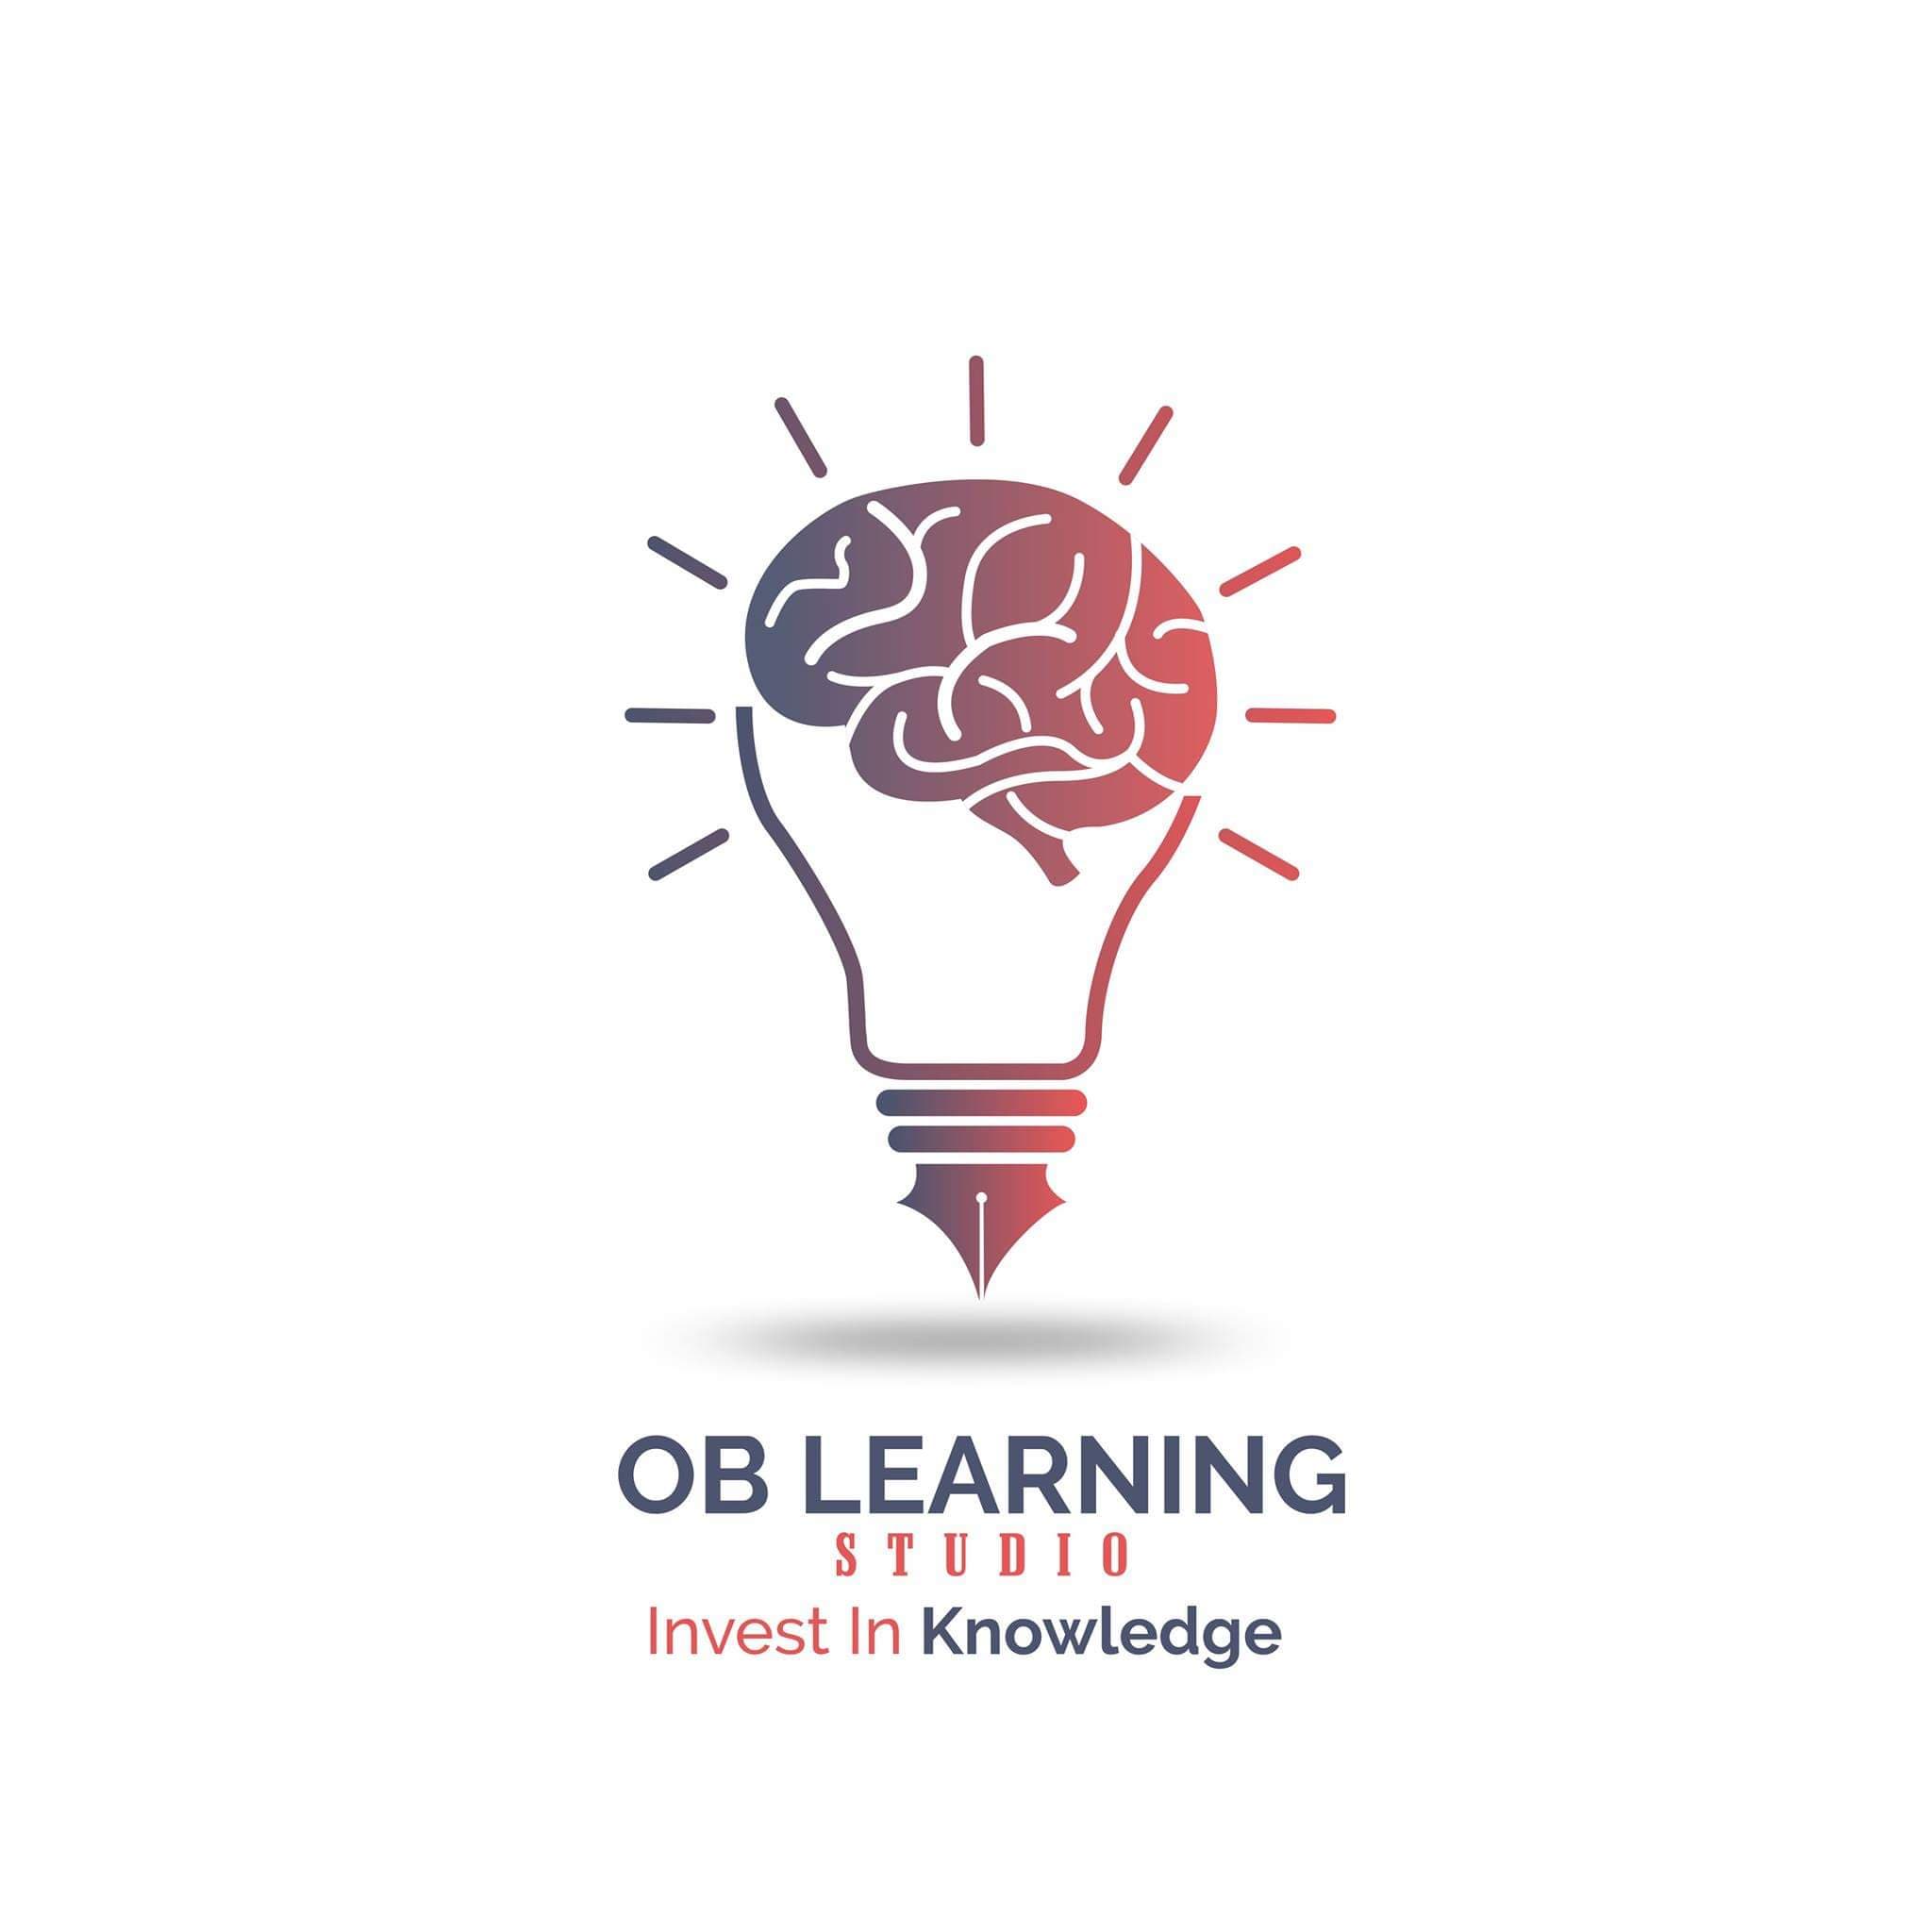 OB Learning Studio